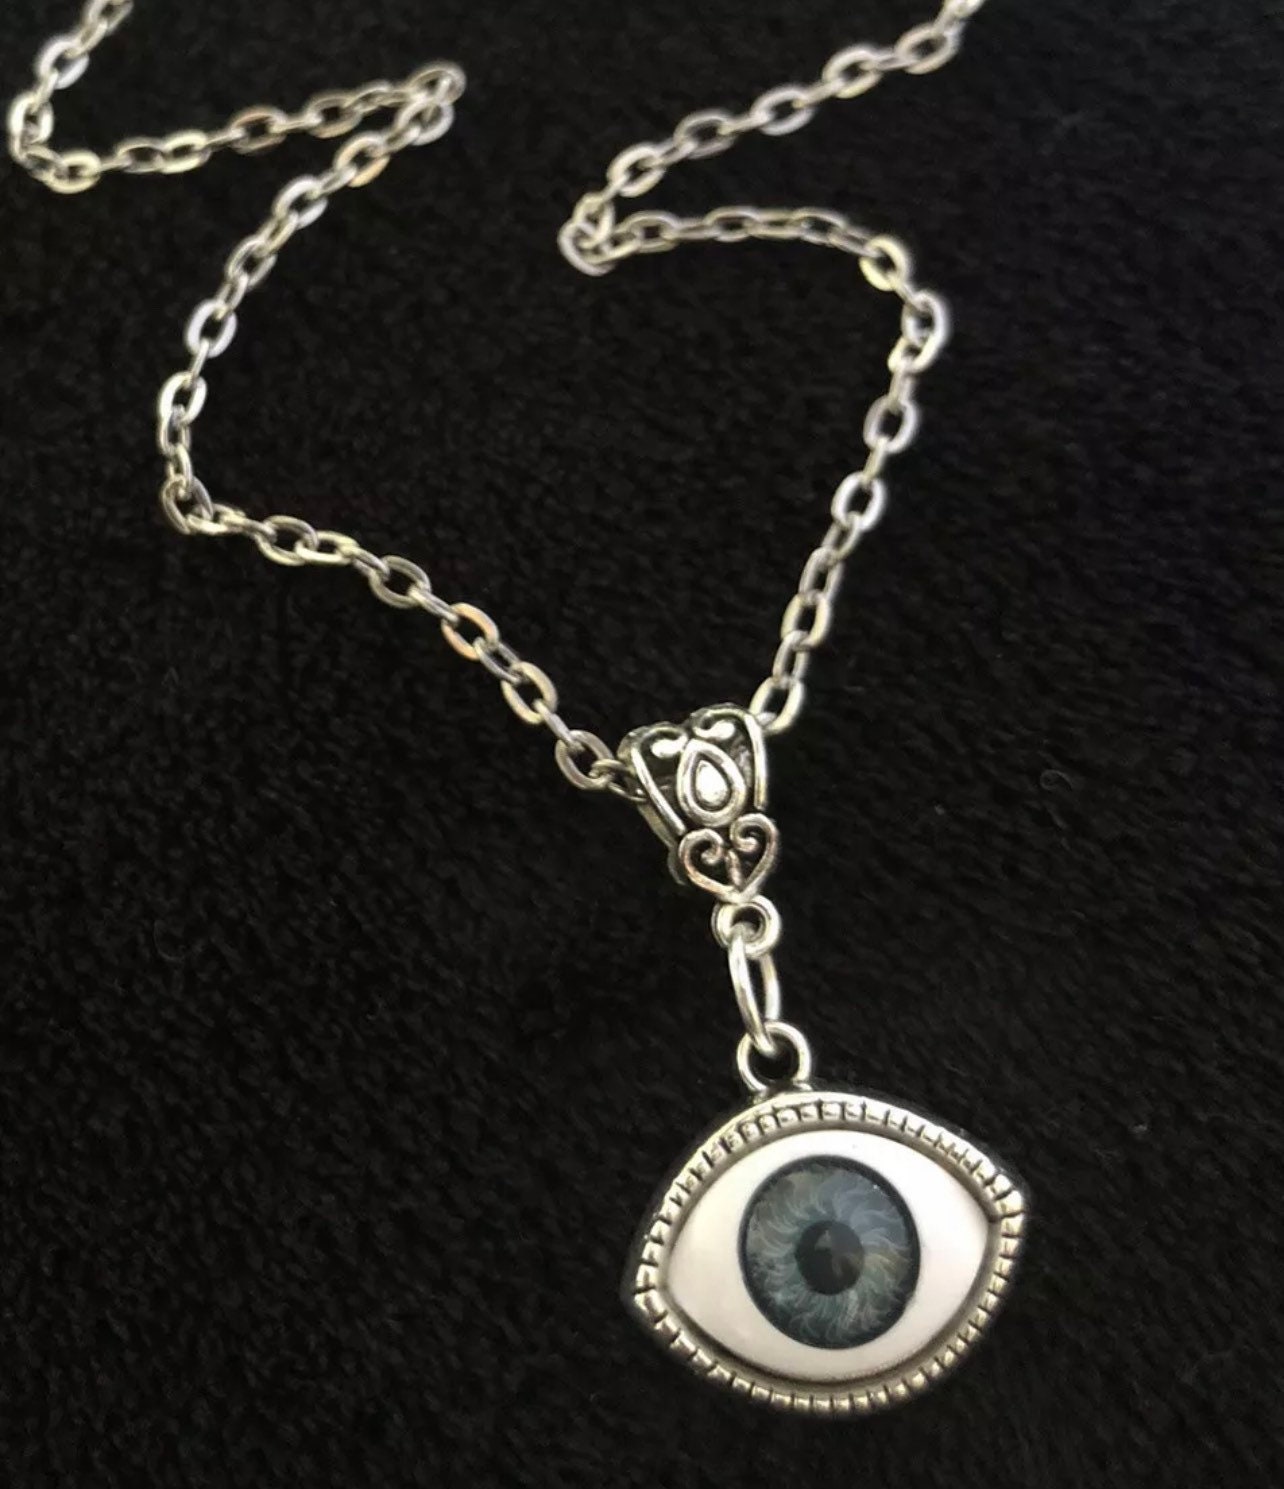 Horror eyeball necklace lucky eye pendant protection charm | Etsy